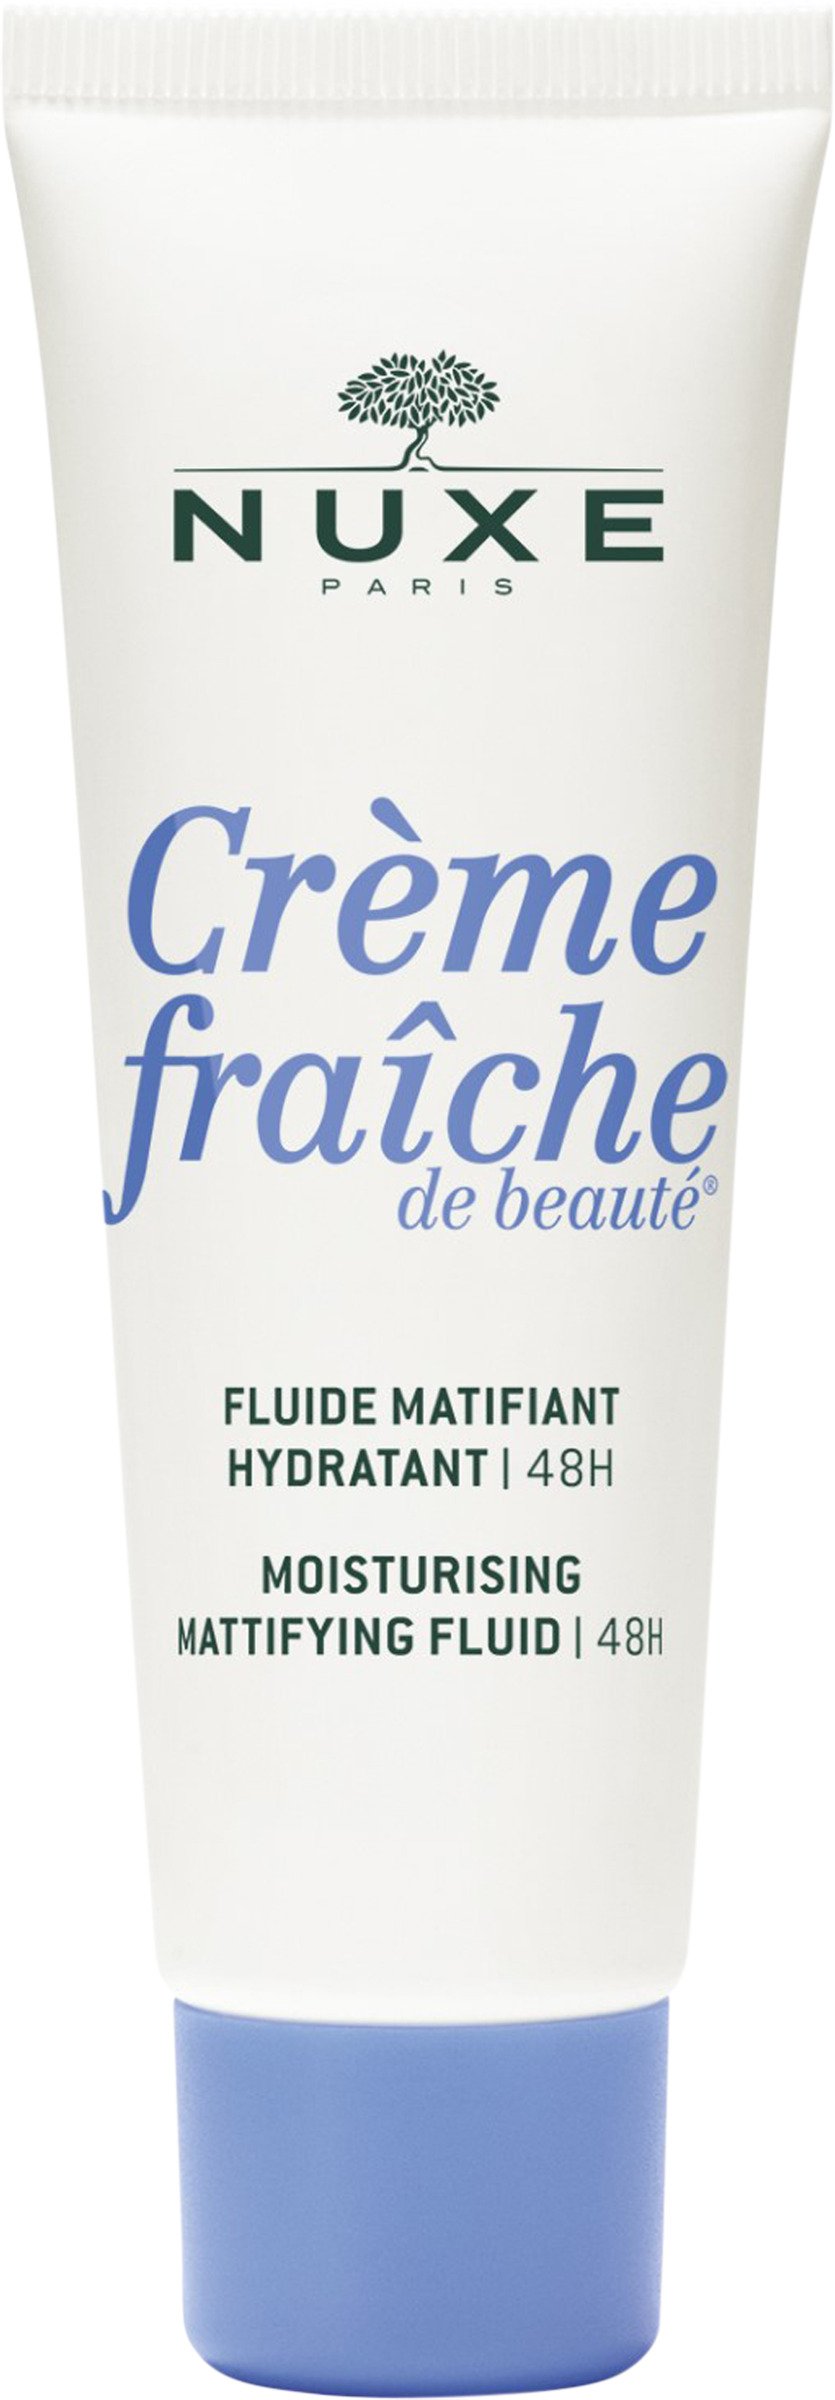 Nuxe Crème Fraiche Moisturising Mattifying Fluid 48H 50 ml